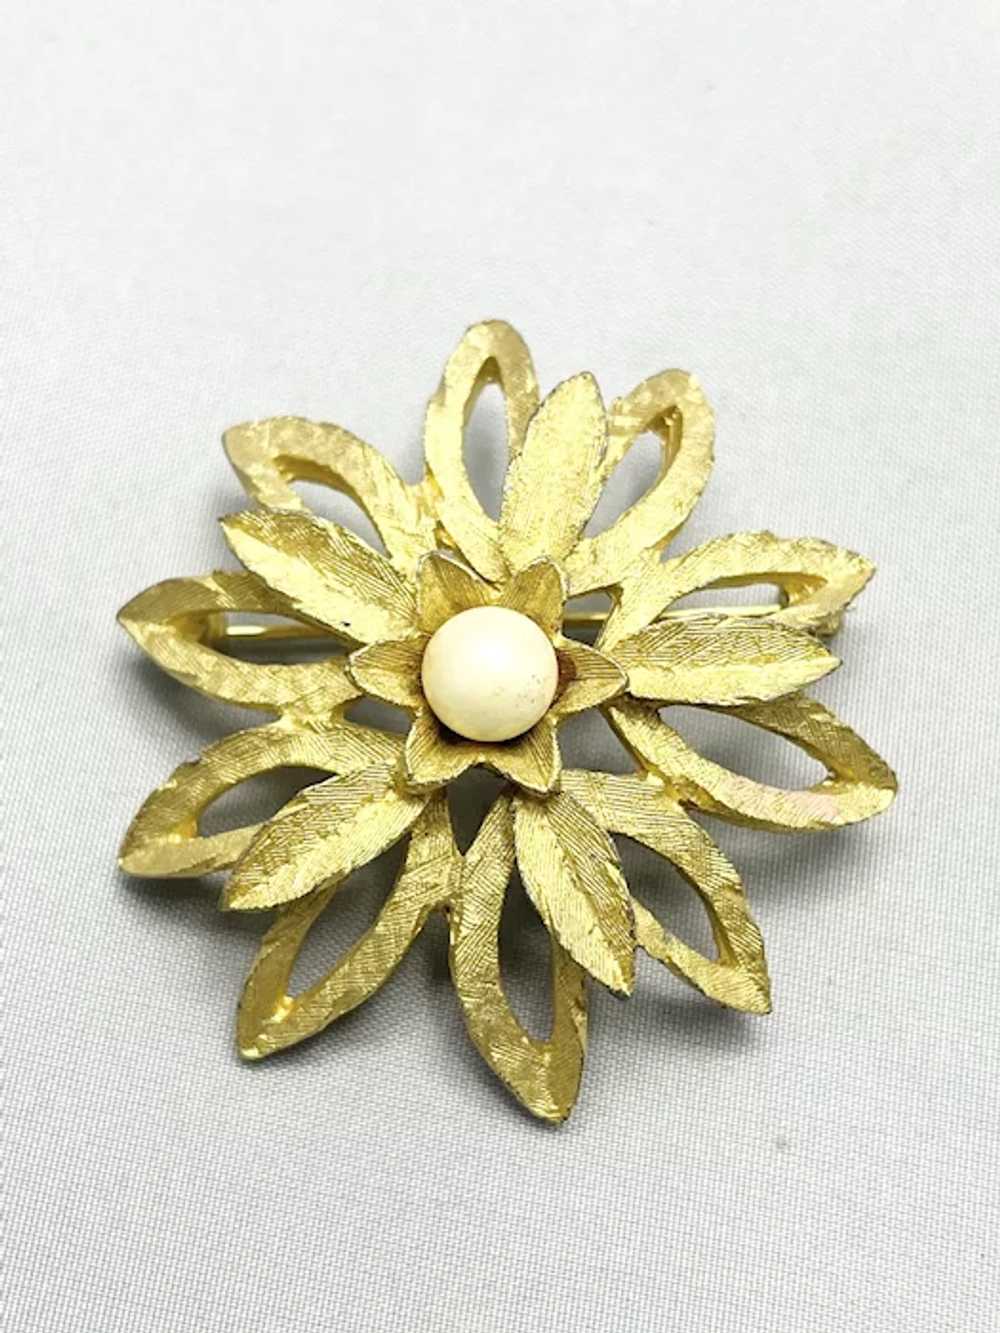 Vintage Gold Tone Flower Brooch Pin - image 2